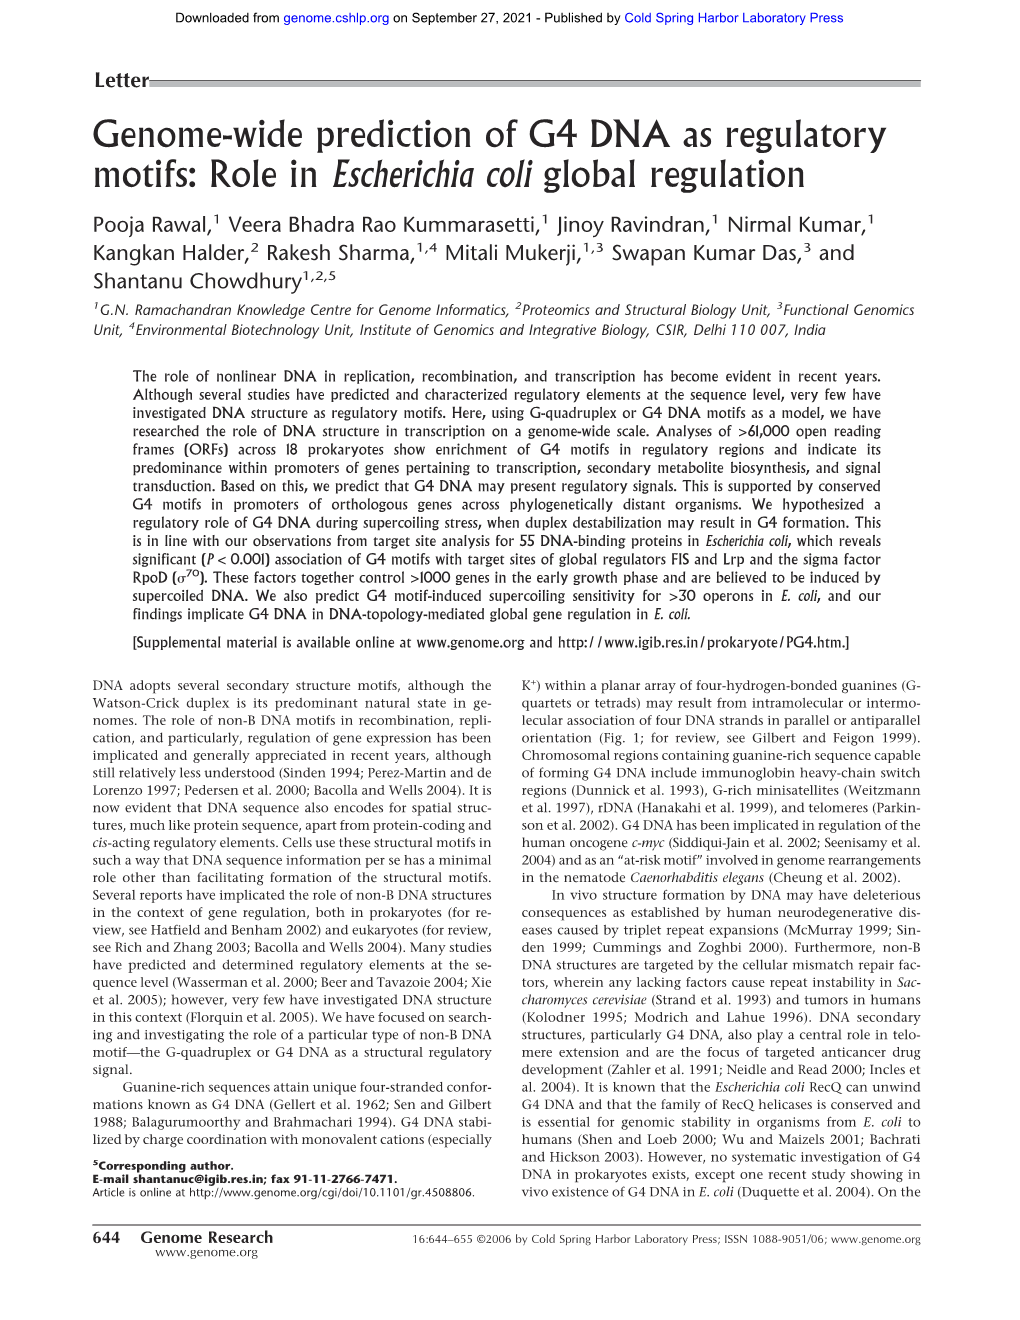 Genome-Wide Prediction of G4 DNA As Regulatory Motifs: Role in Escherichia Coli Global Regulation